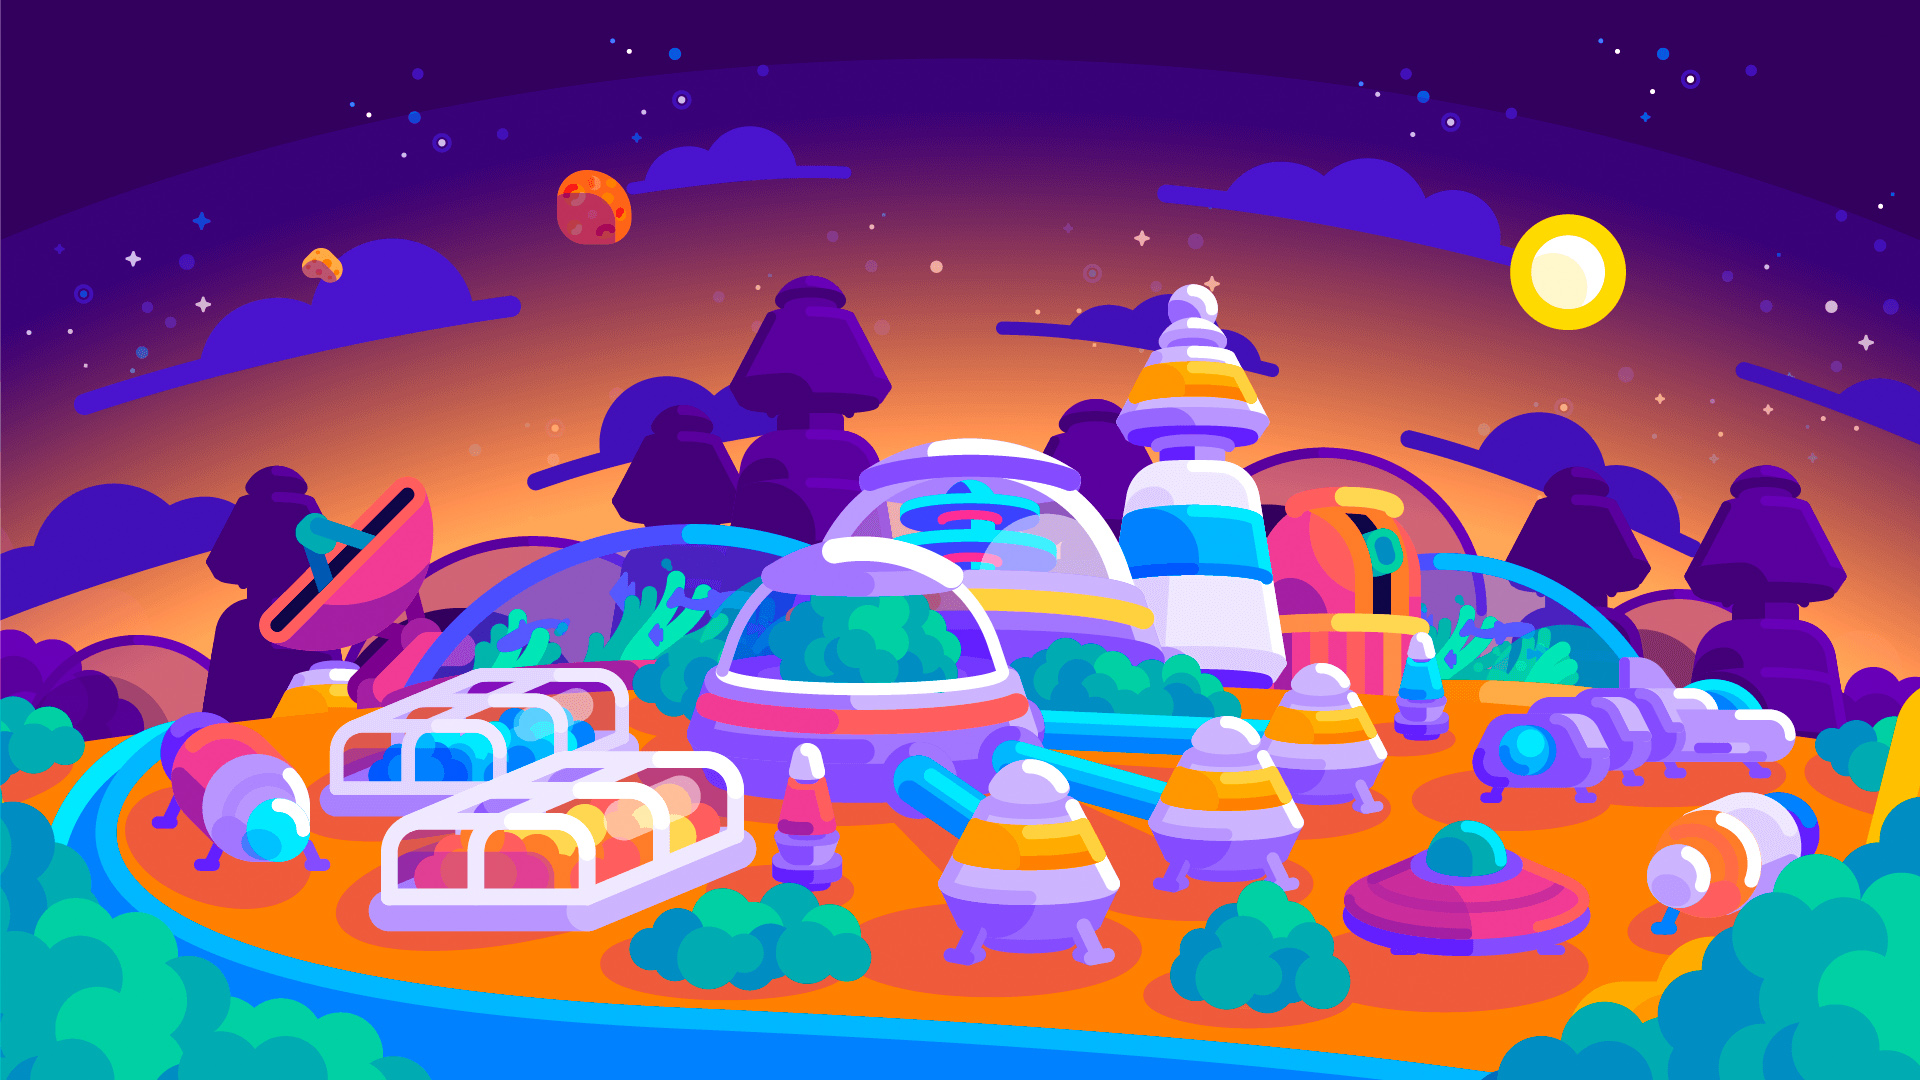 Download Kurzgesagt Mars Base On Itl.cat